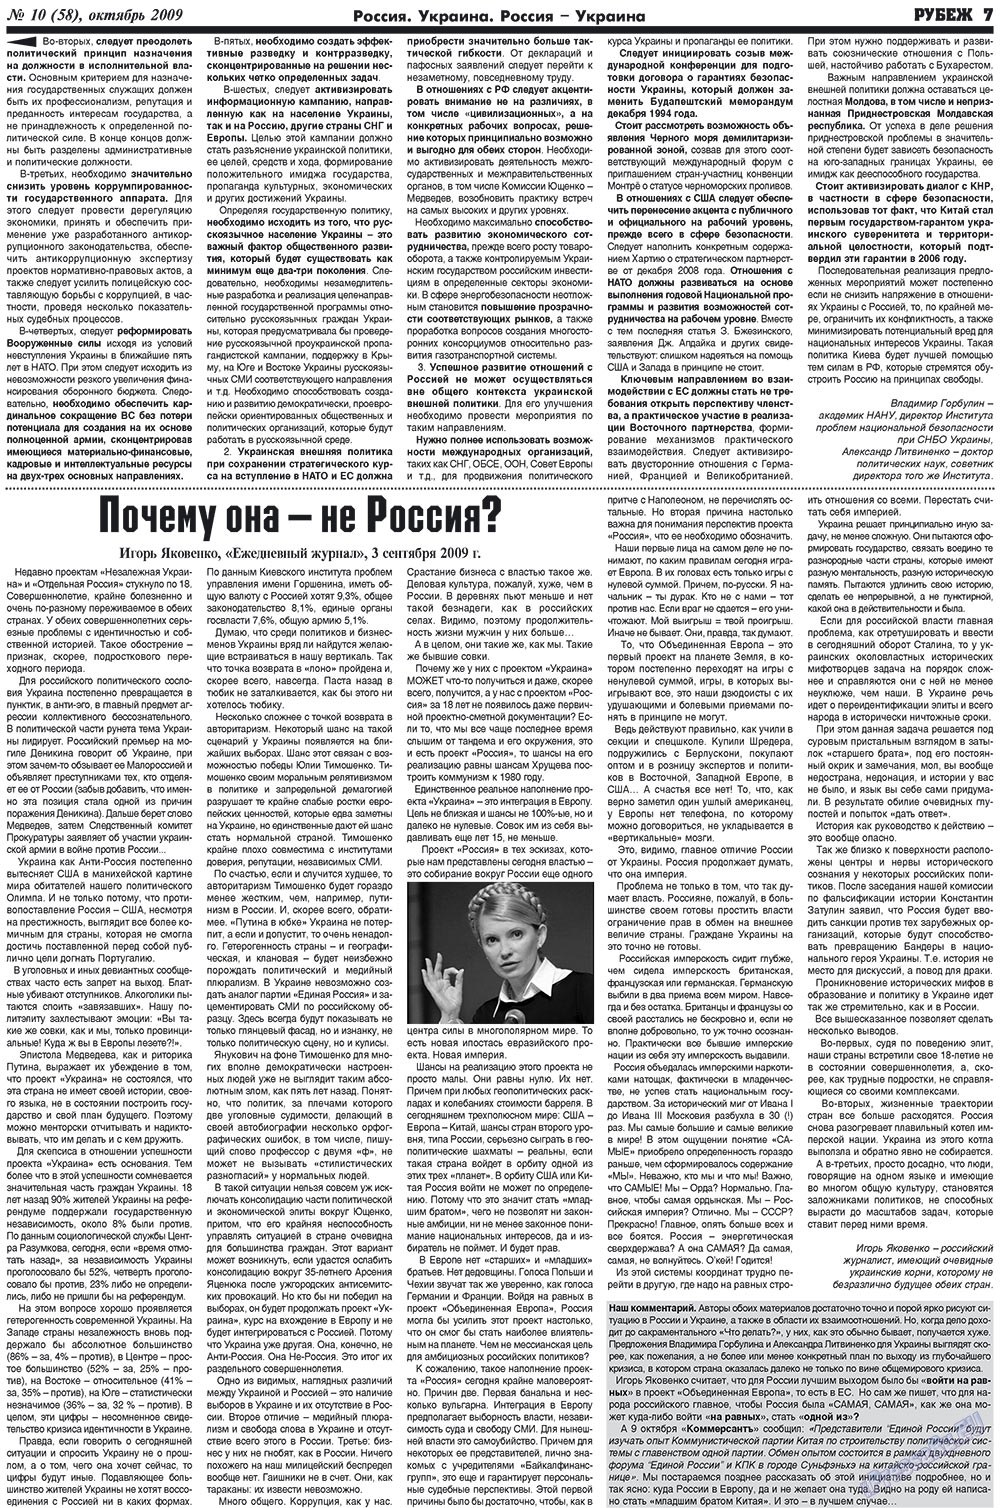 Рубеж, газета. 2009 №10 стр.7